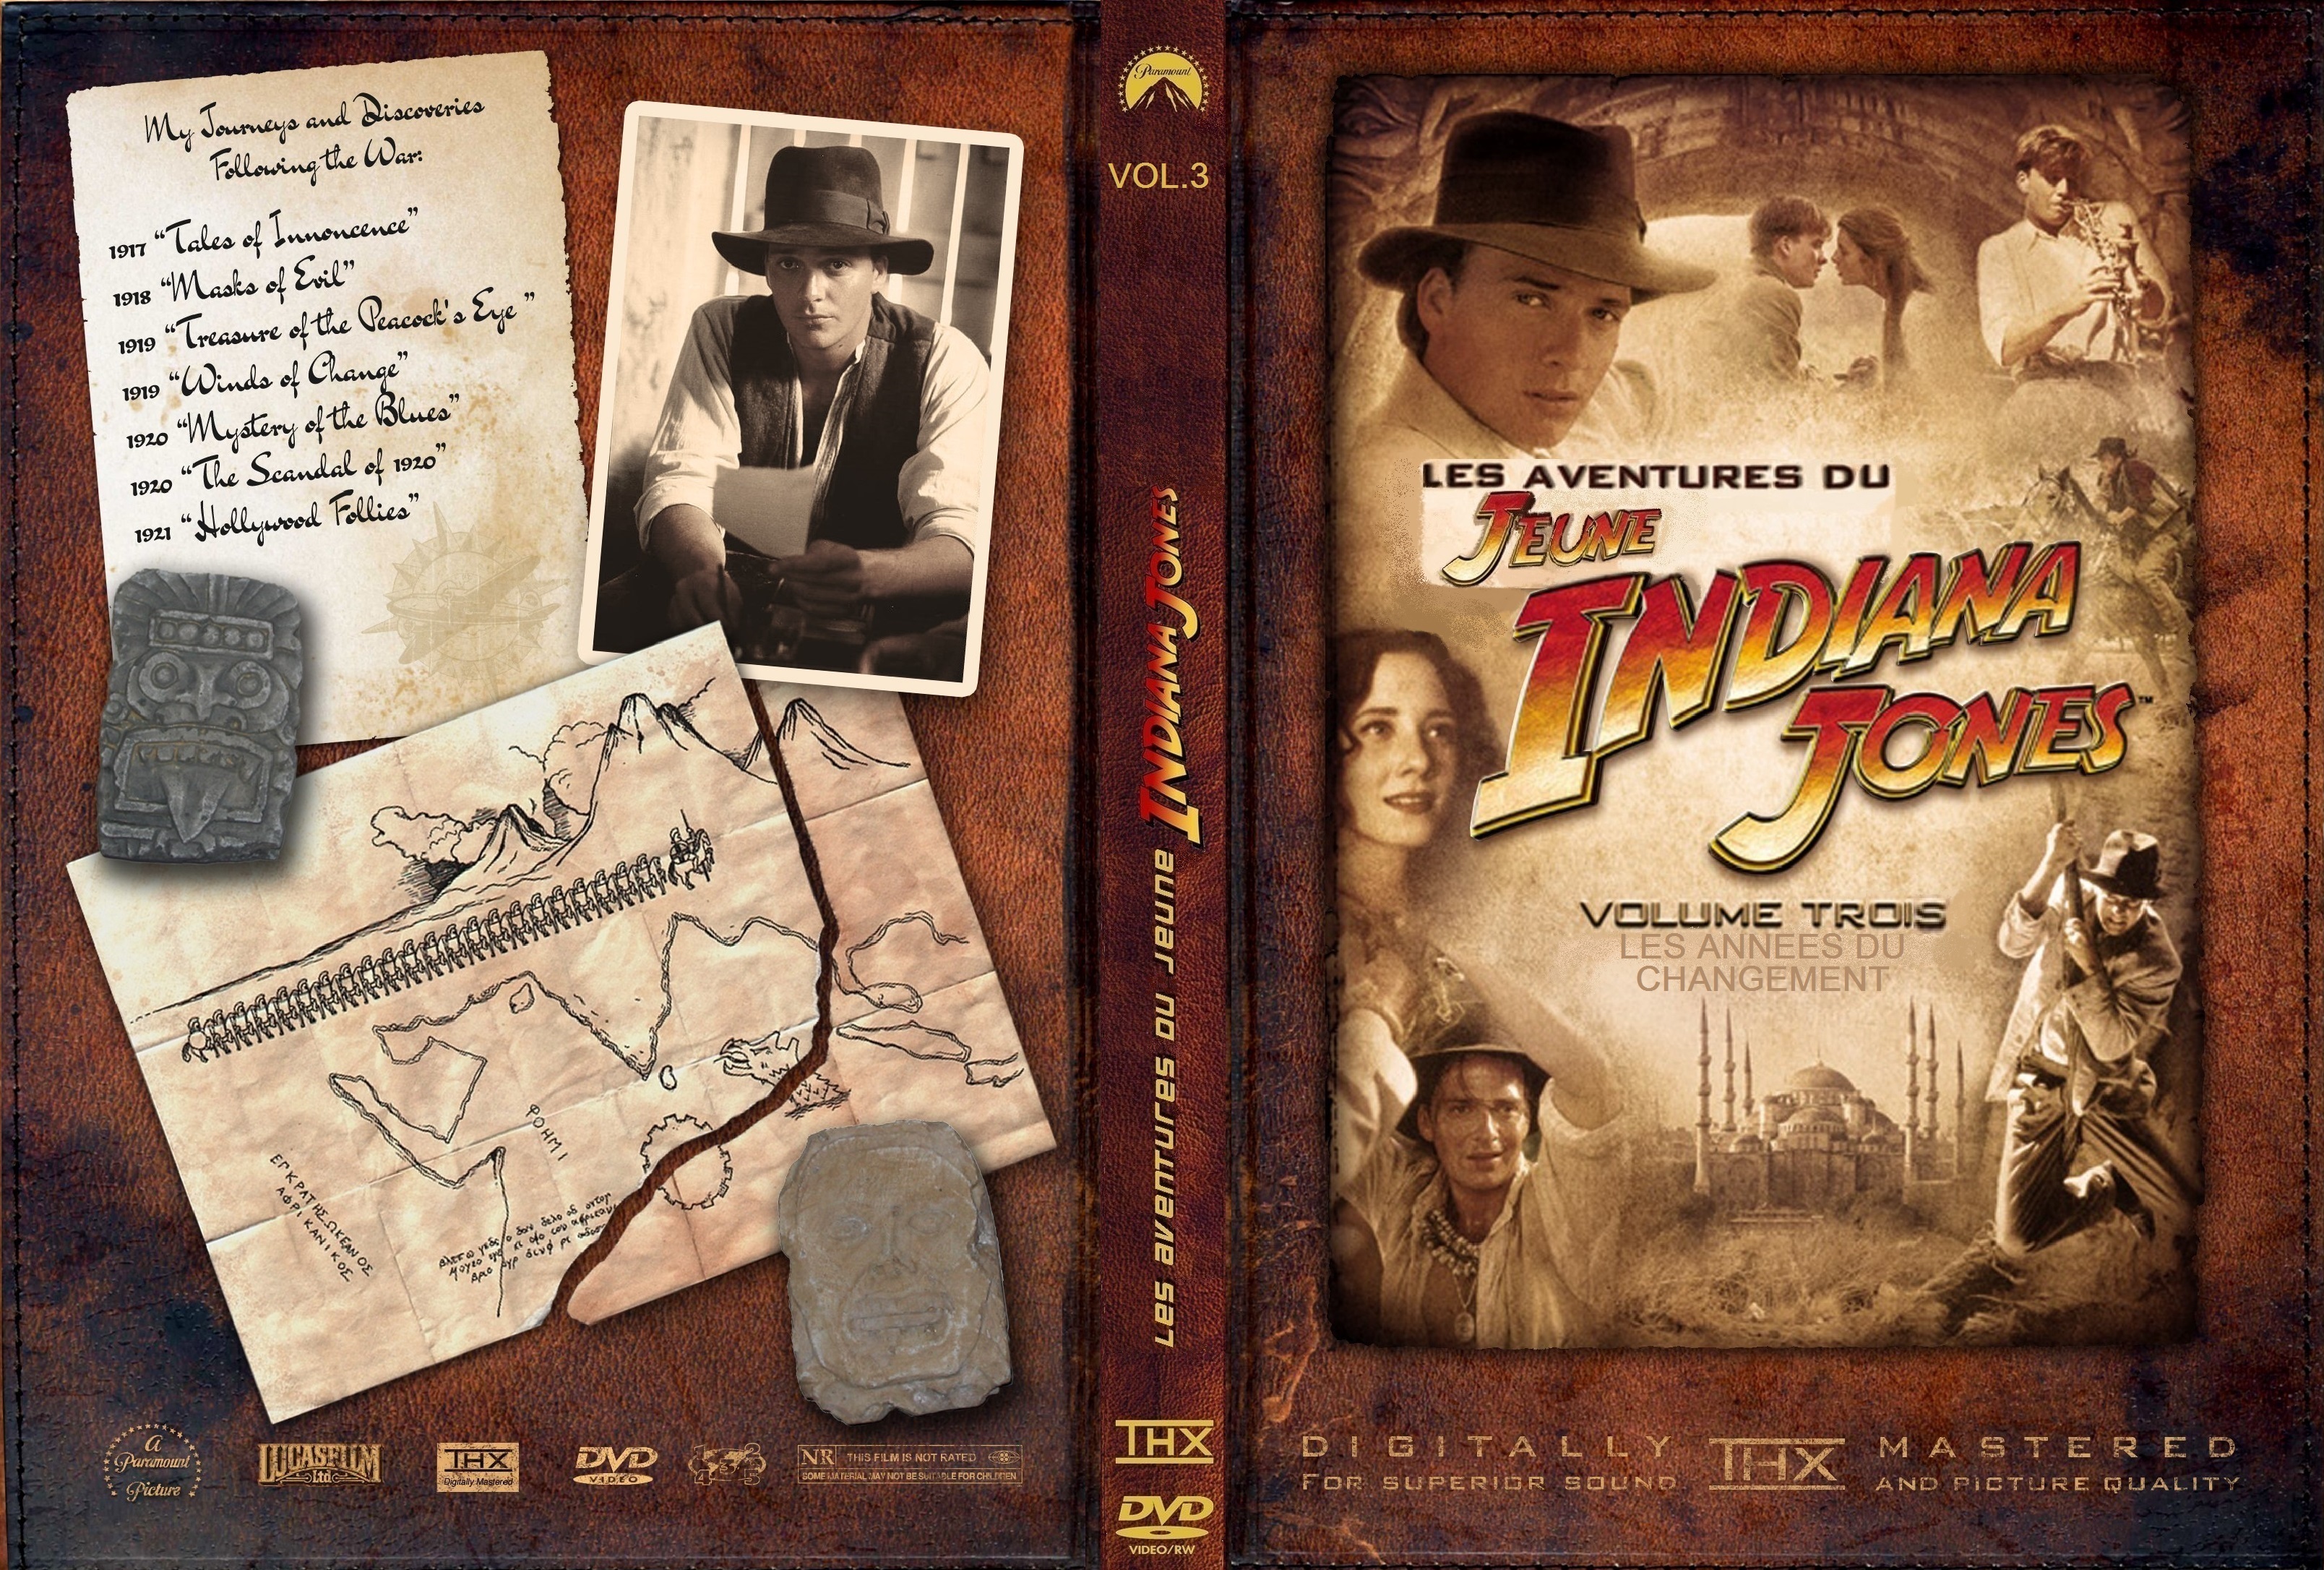 Jaquette DVD Les aventures du jeune Indiana Jones vol 3 custom